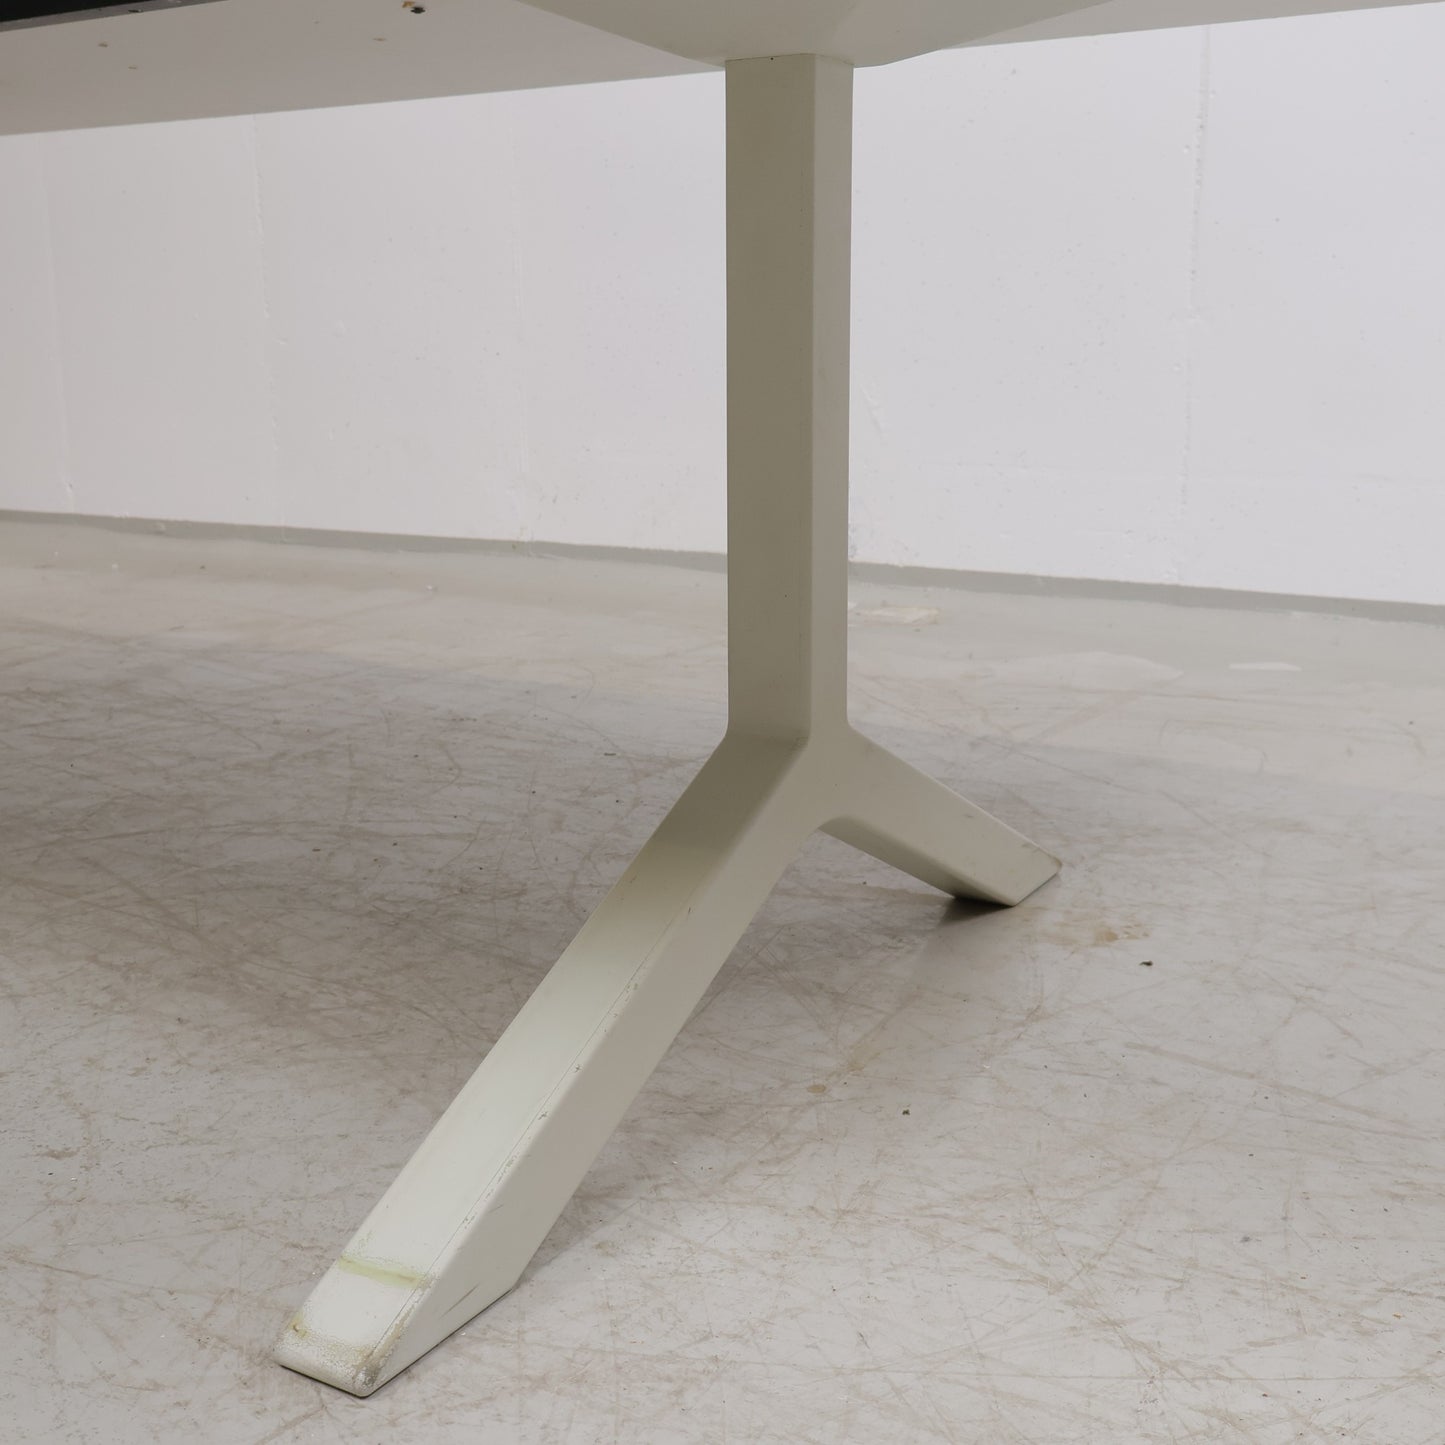 Kvalitetssikret | Lammhults bord, 240x120 cm